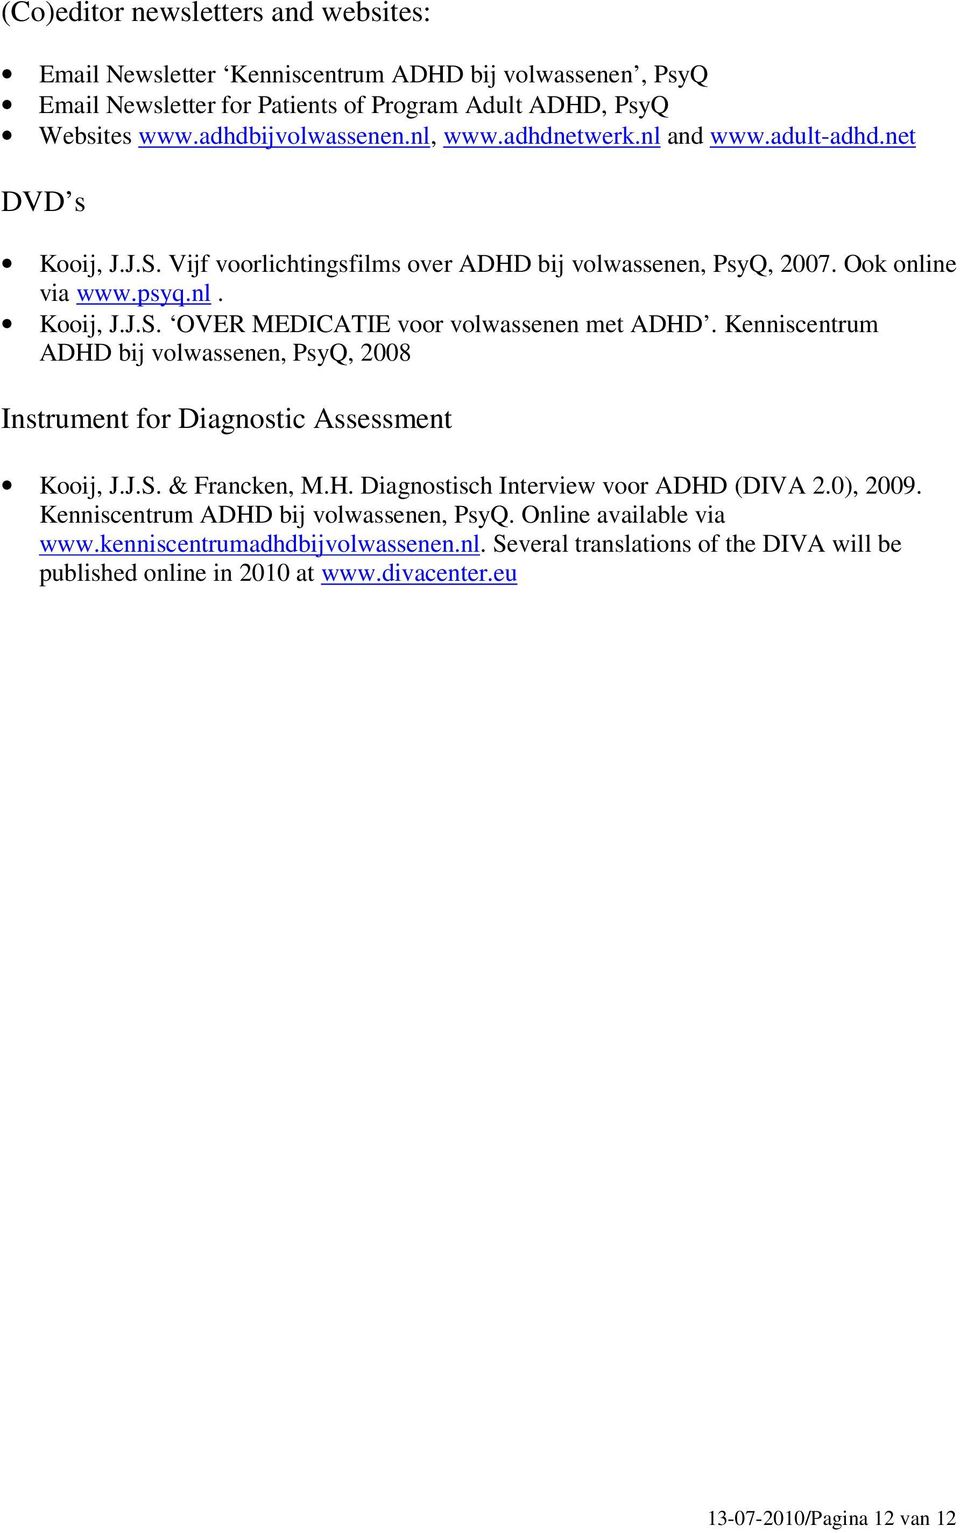 Kenniscentrum ADHD bij volwassenen, PsyQ, 2008 Instrument for Diagnostic Assessment Kooij, J.J.S. & Francken, M.H. Diagnostisch Interview voor ADHD (DIVA 2.0), 2009.